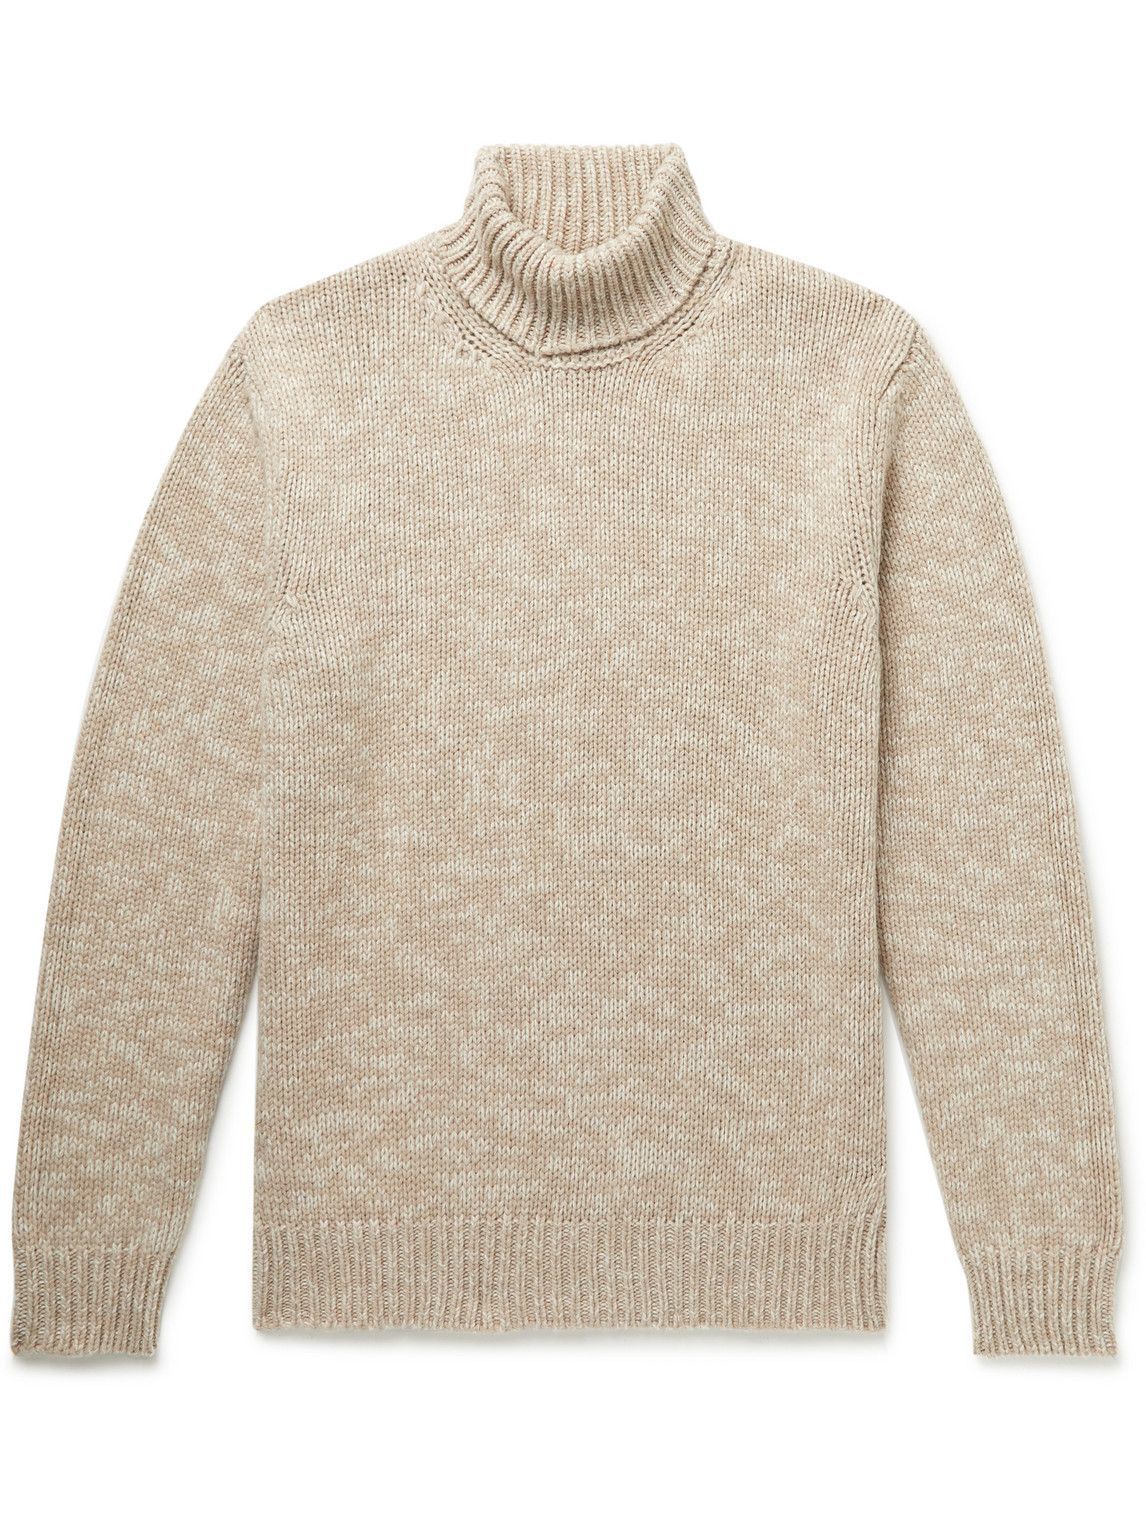 Altea - Cashmere Rollneck Sweater - Neutrals Altea